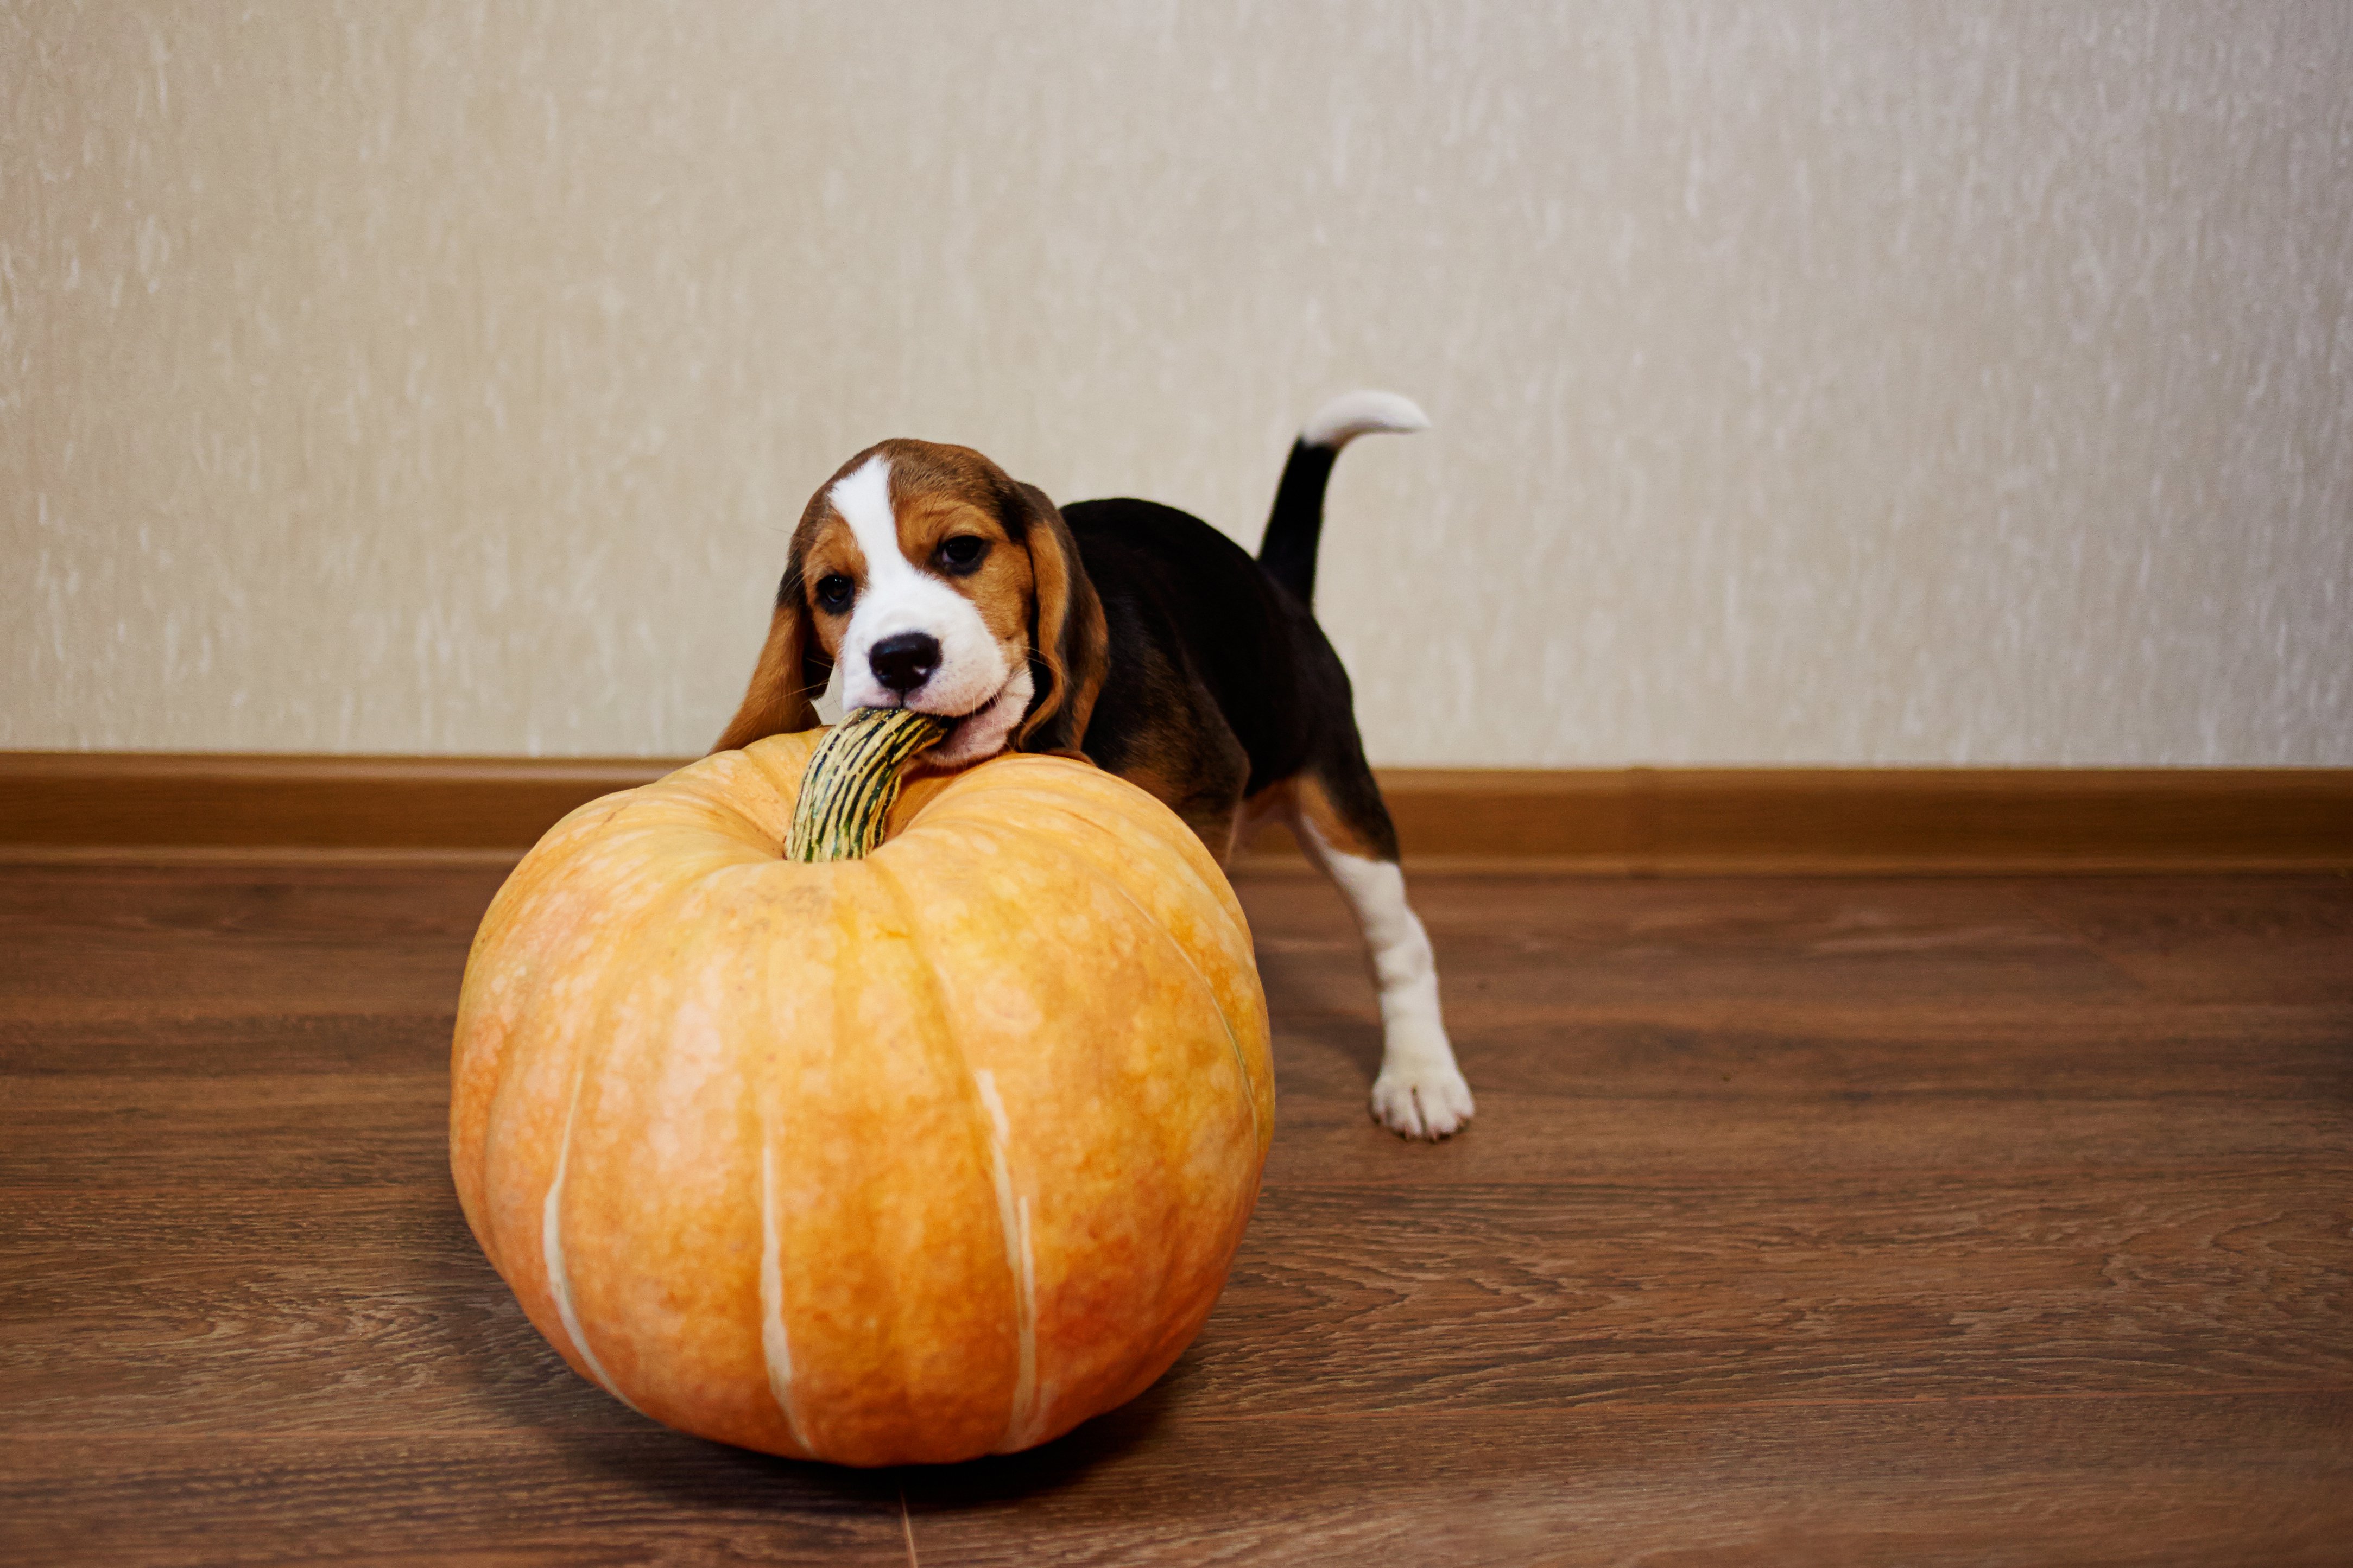 A beagle puppy biting the stem of a large pumpkin.